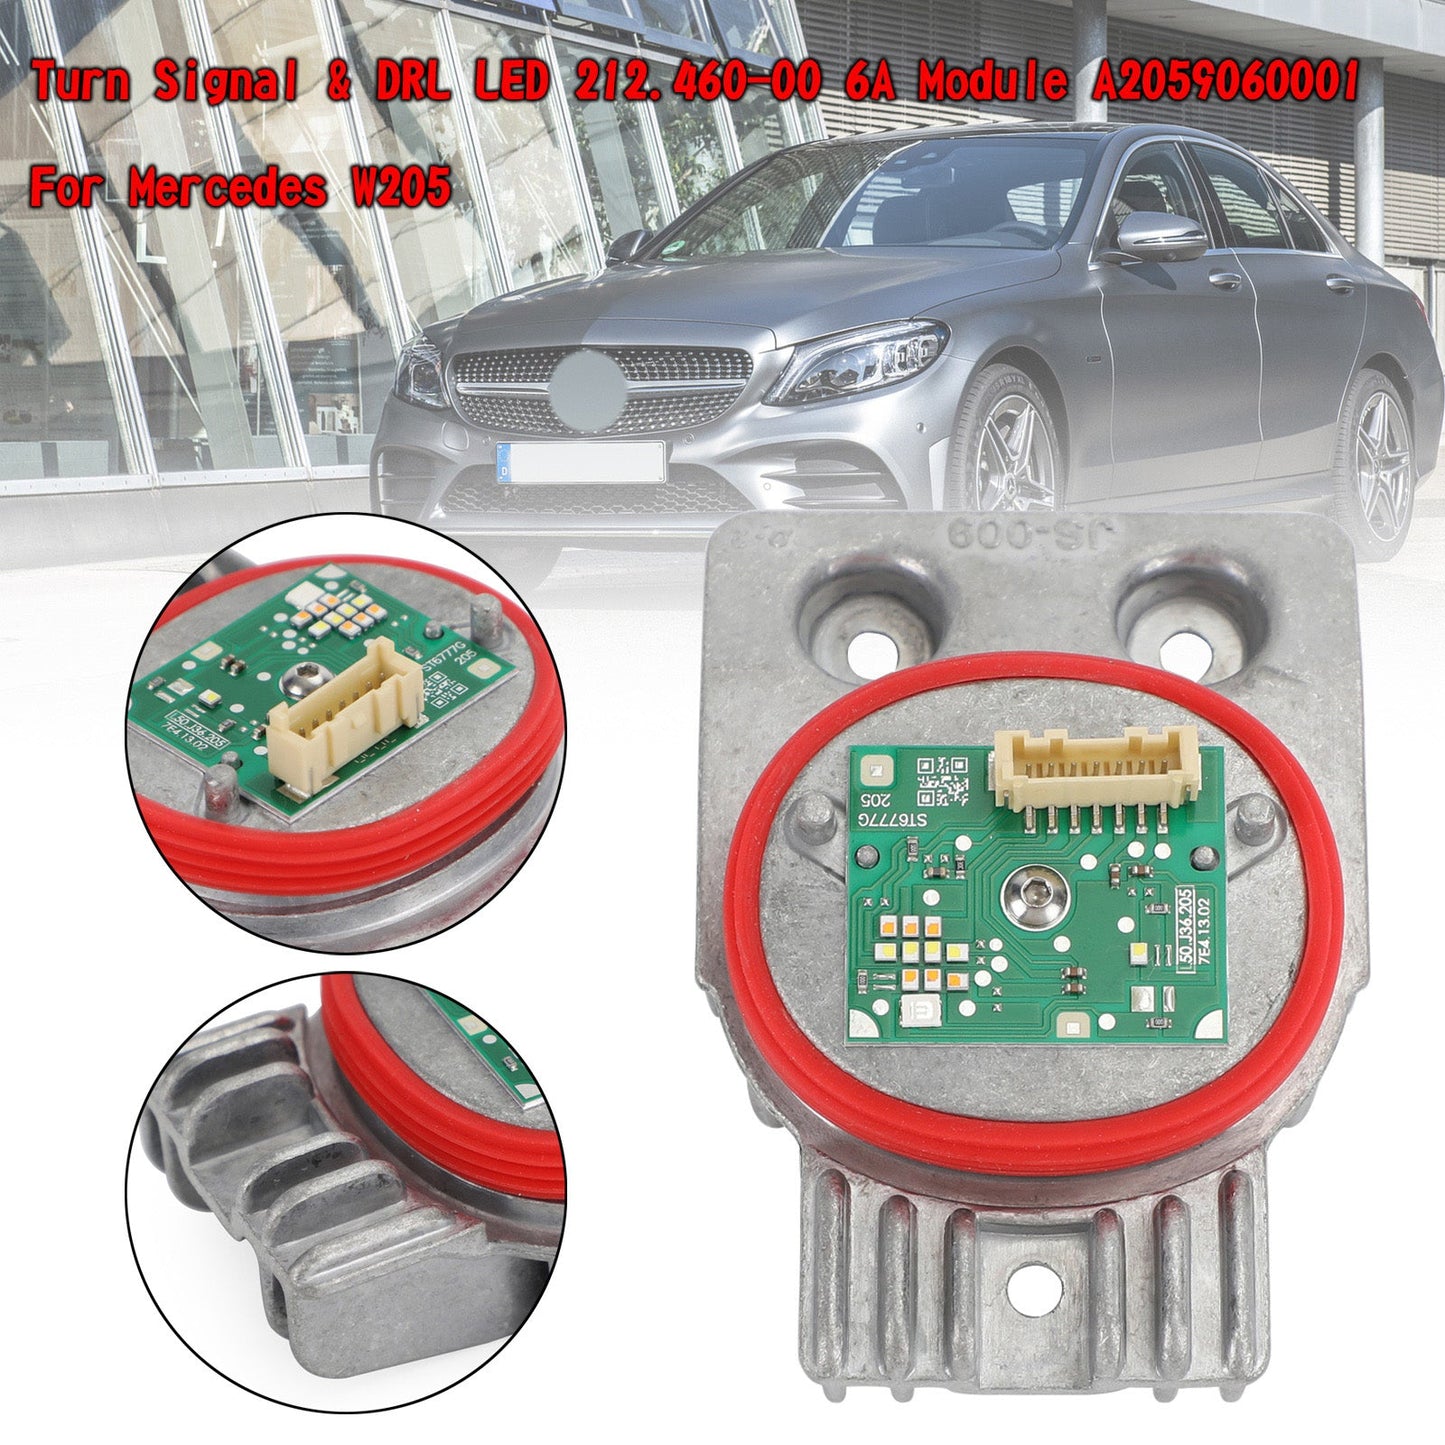 Turnsignal & DRL LED 212.460-00 6A Modul A2059060001 für Mercedes W205 Generic